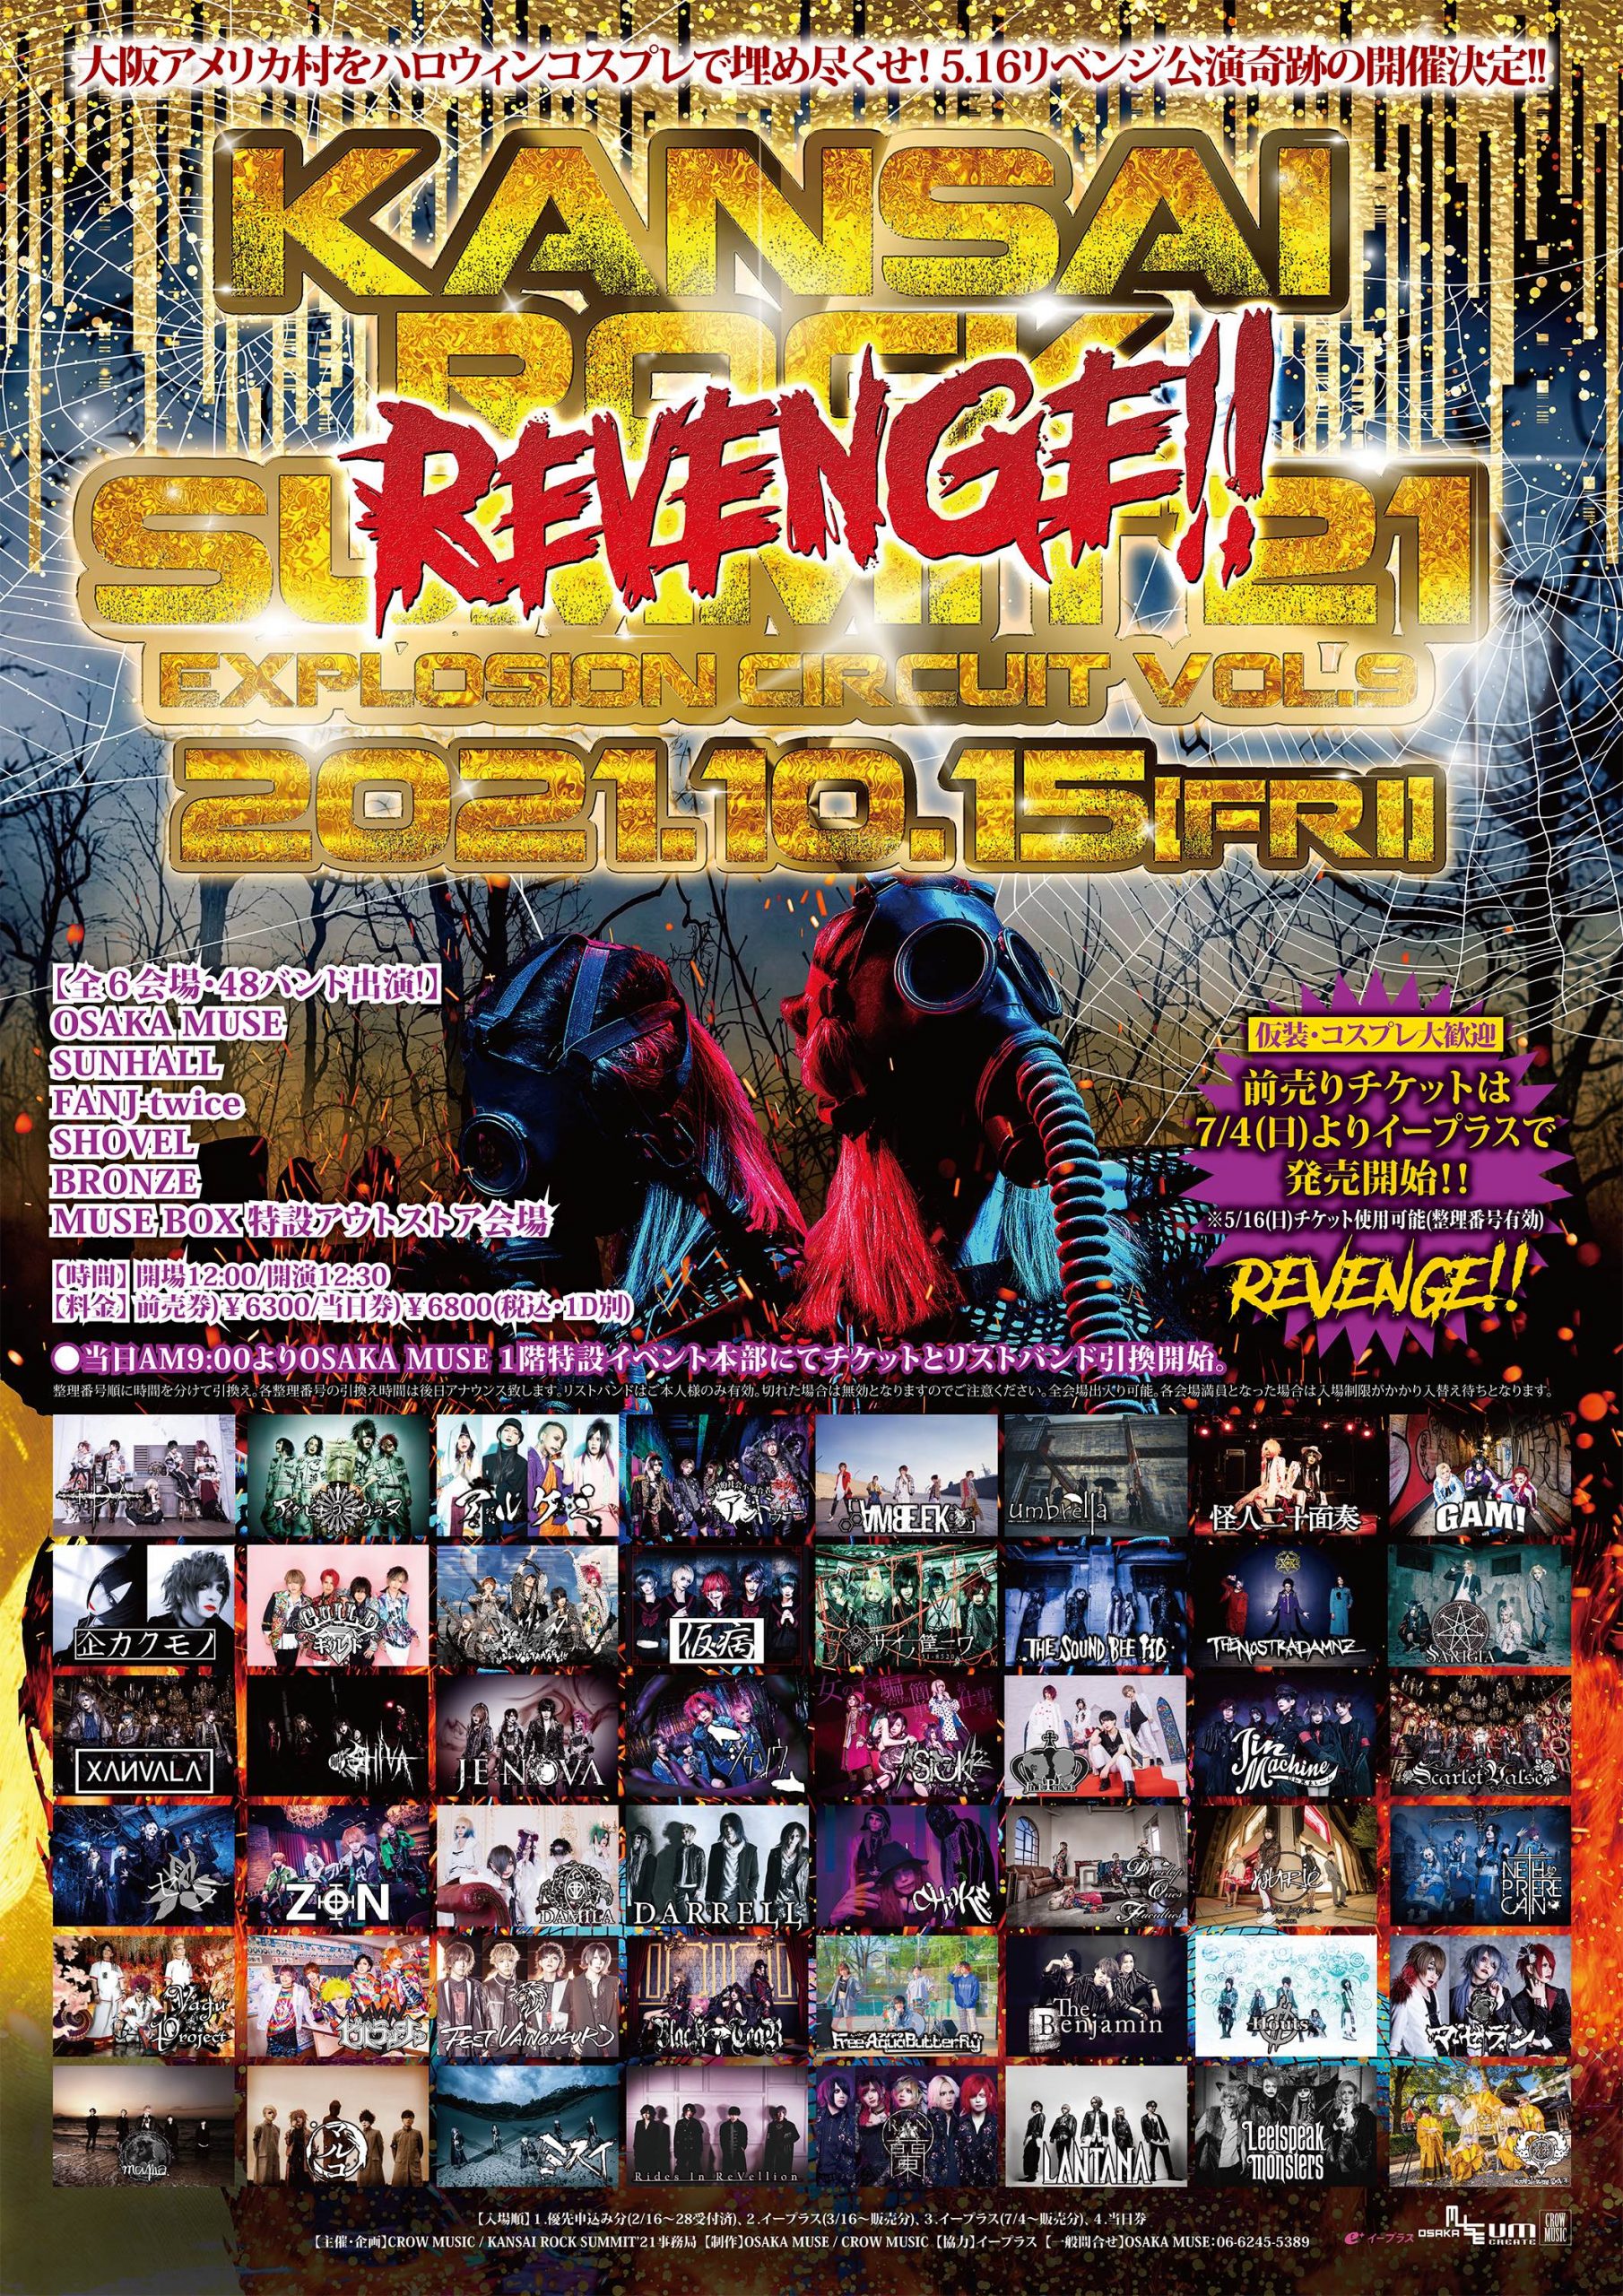 KANSAI ROCK SUMMIT’21 REVENGE!! EXPLOSION CIRCUIT vol.9